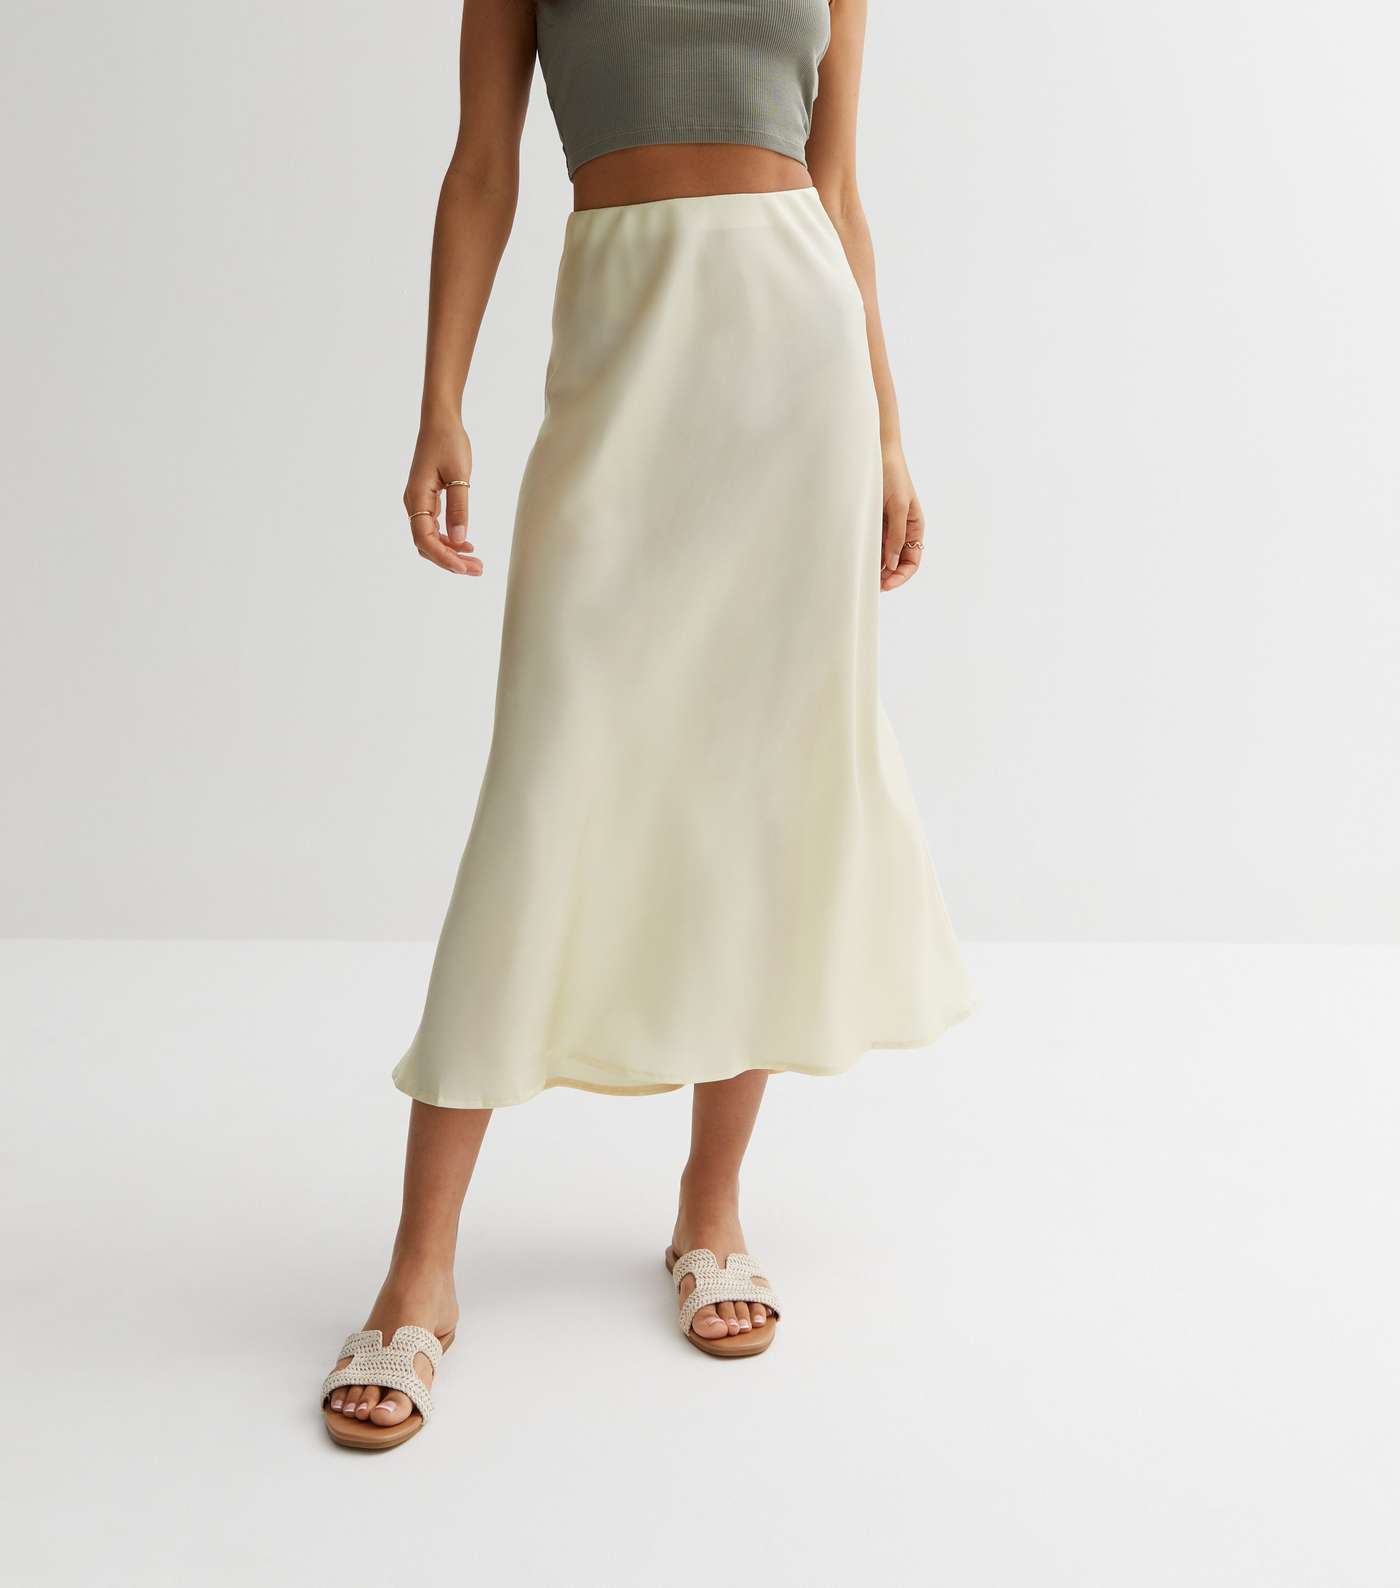 Petite Off White Satin Bias Cut Midaxi Skirt Image 2